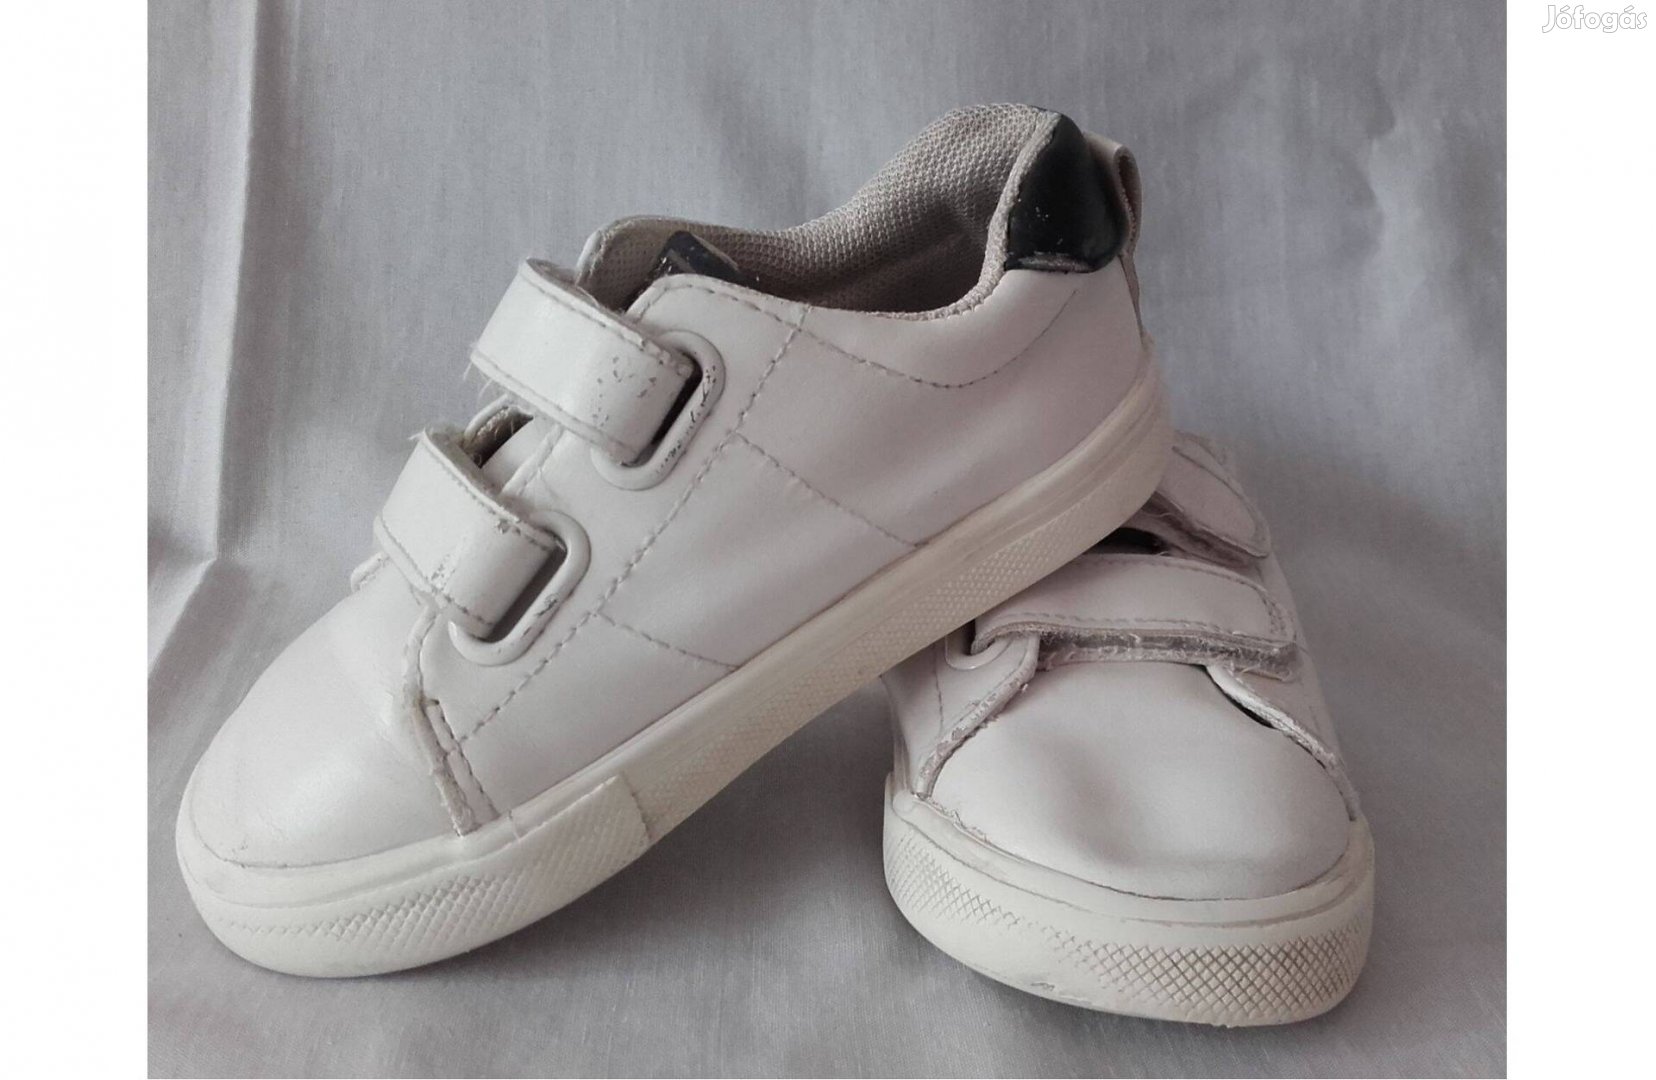 Fehér 23-as cipő, H&M-es, bth:14 cm